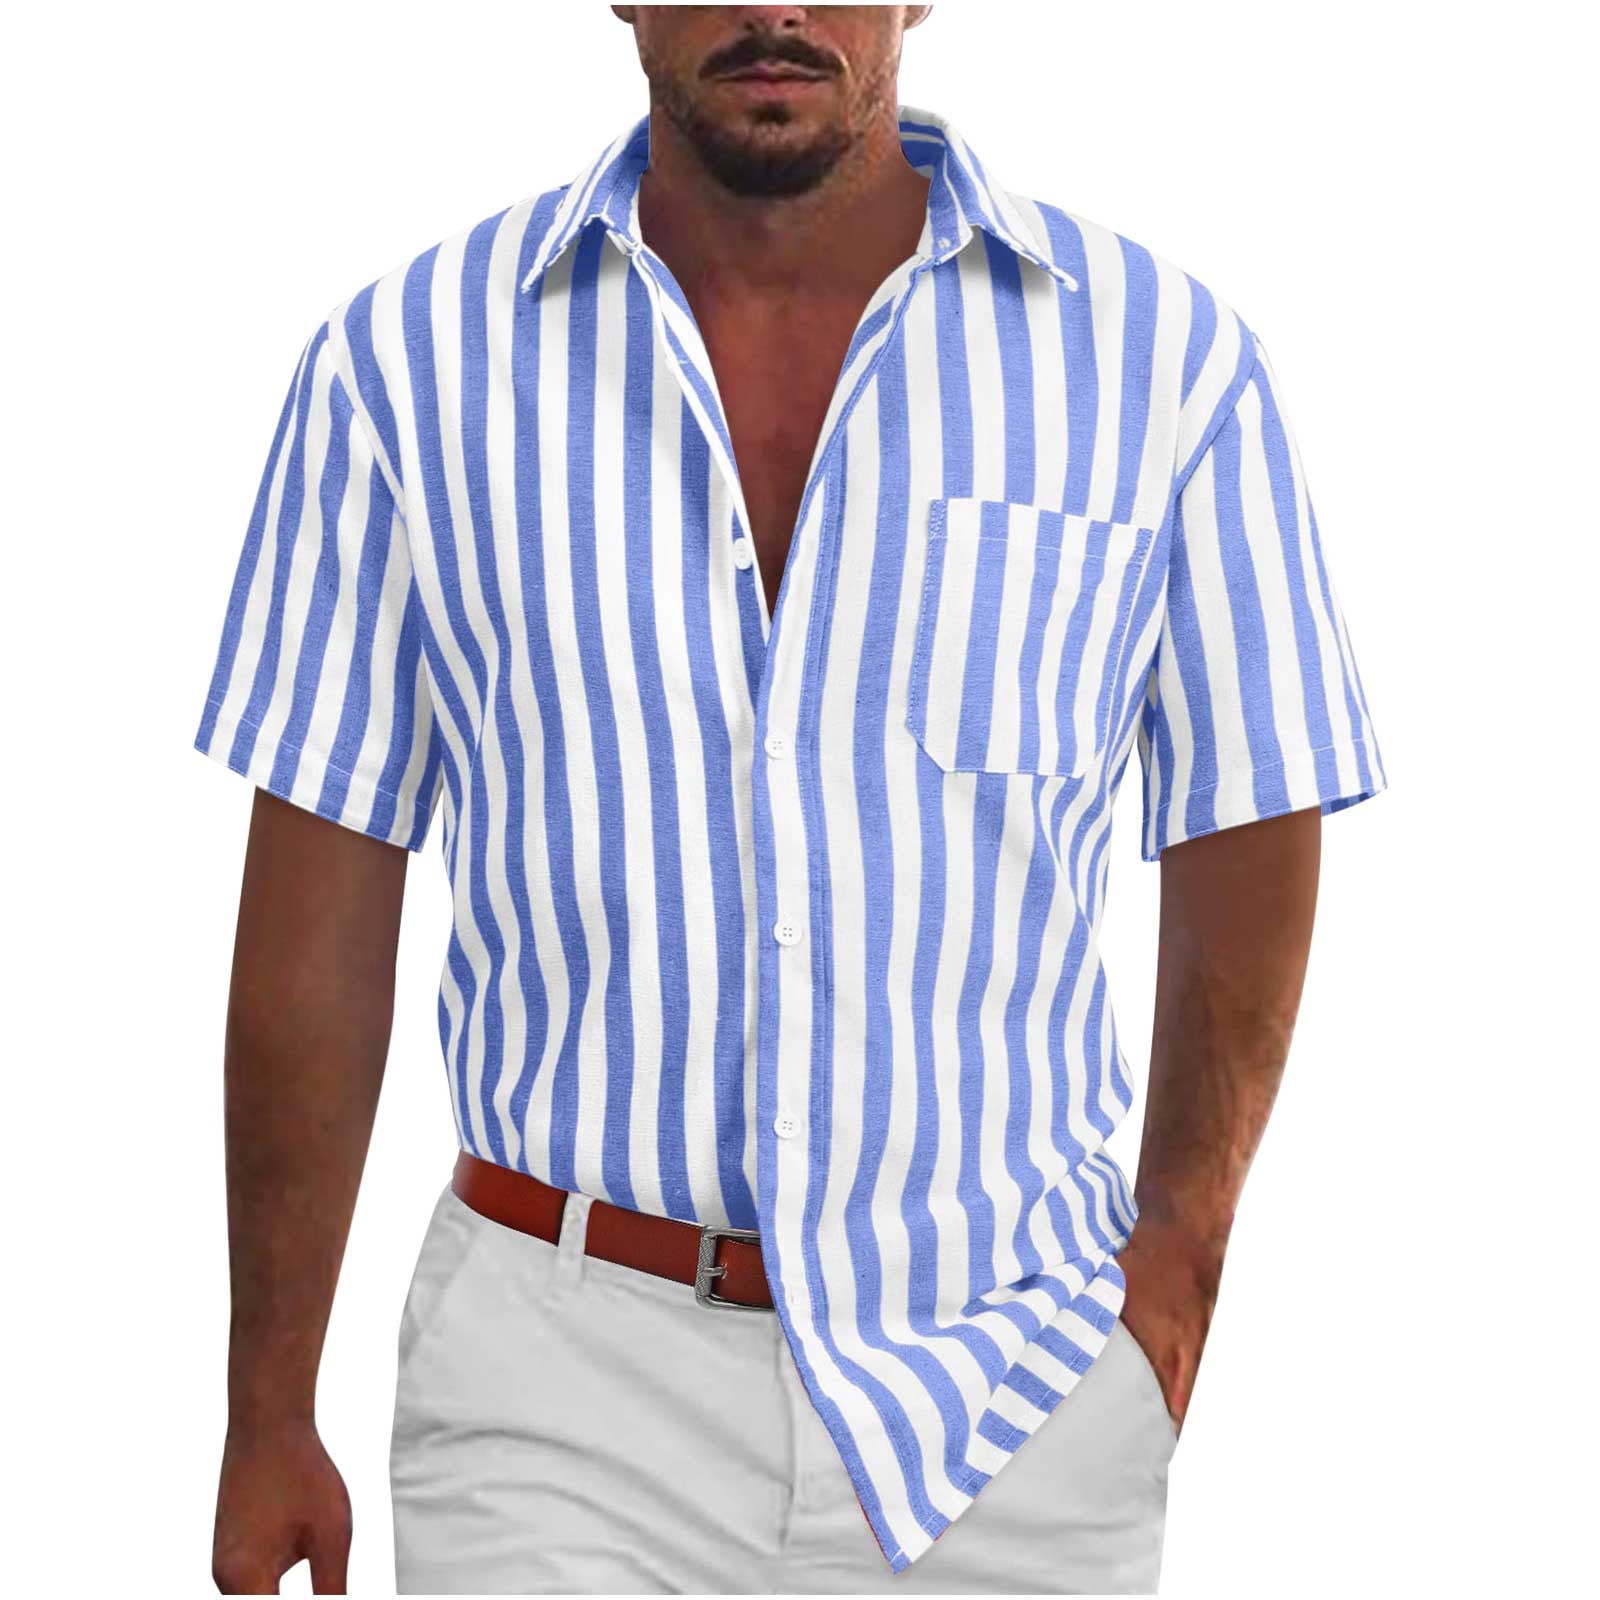 RYRJJ Men's Striped Business Dress Shirts Slim Fit Short Sleeve